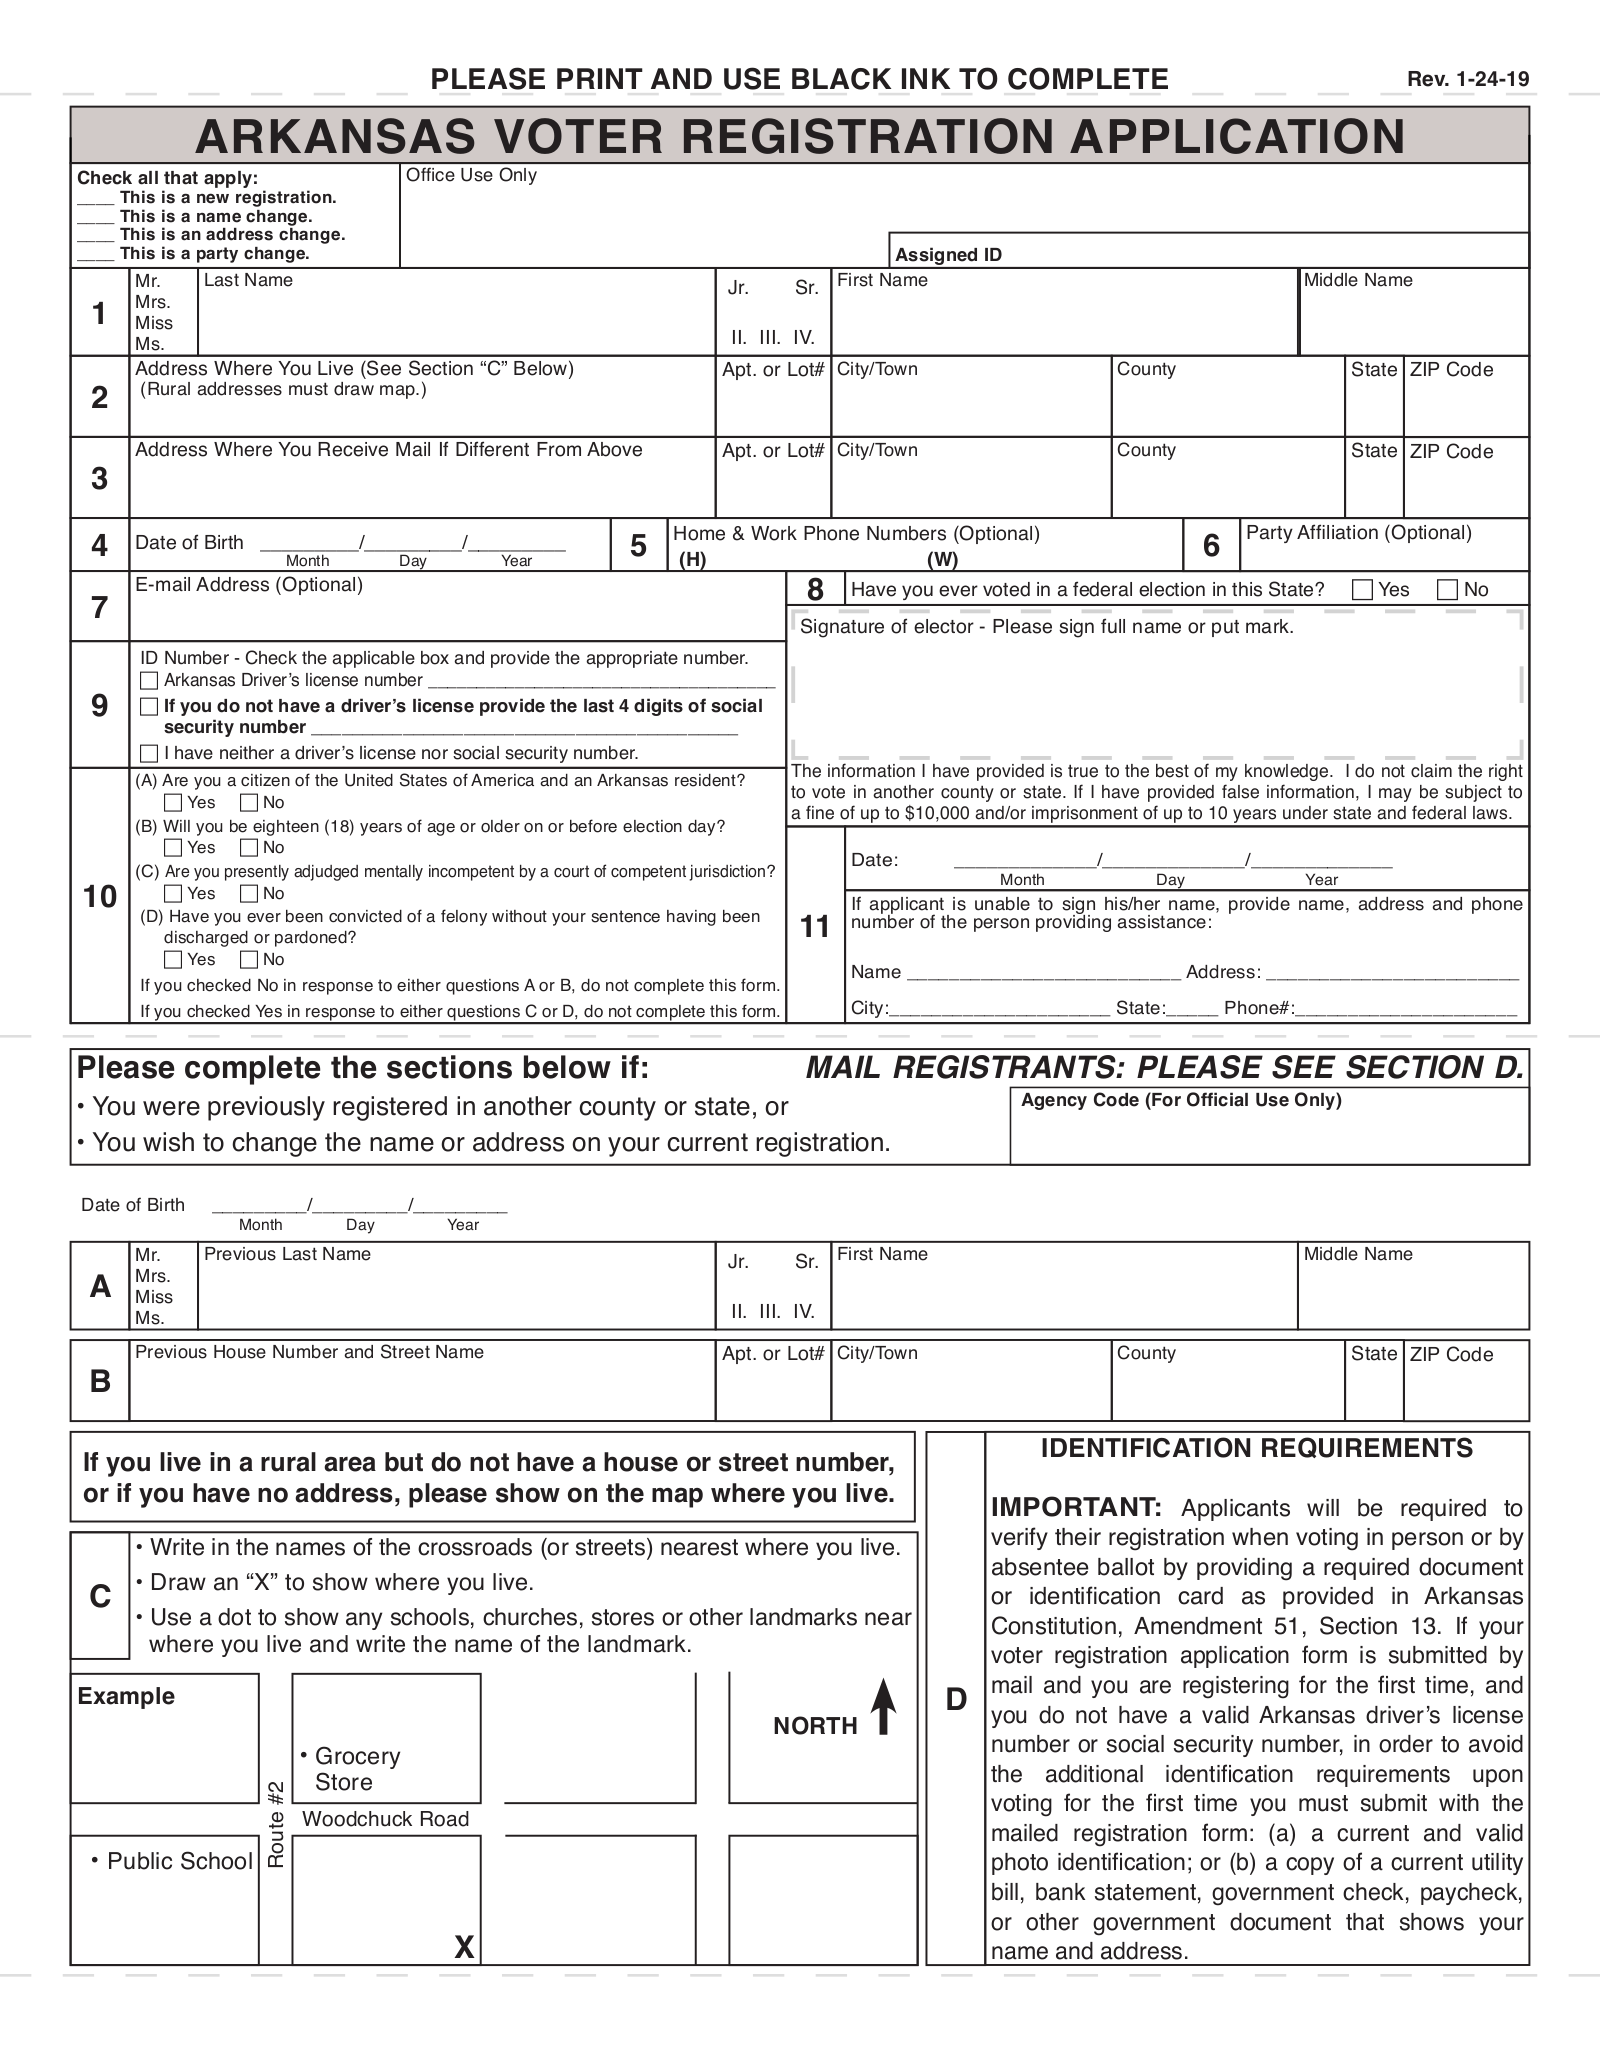 Arkansas Voter Registration Form – Register to Vote in AR